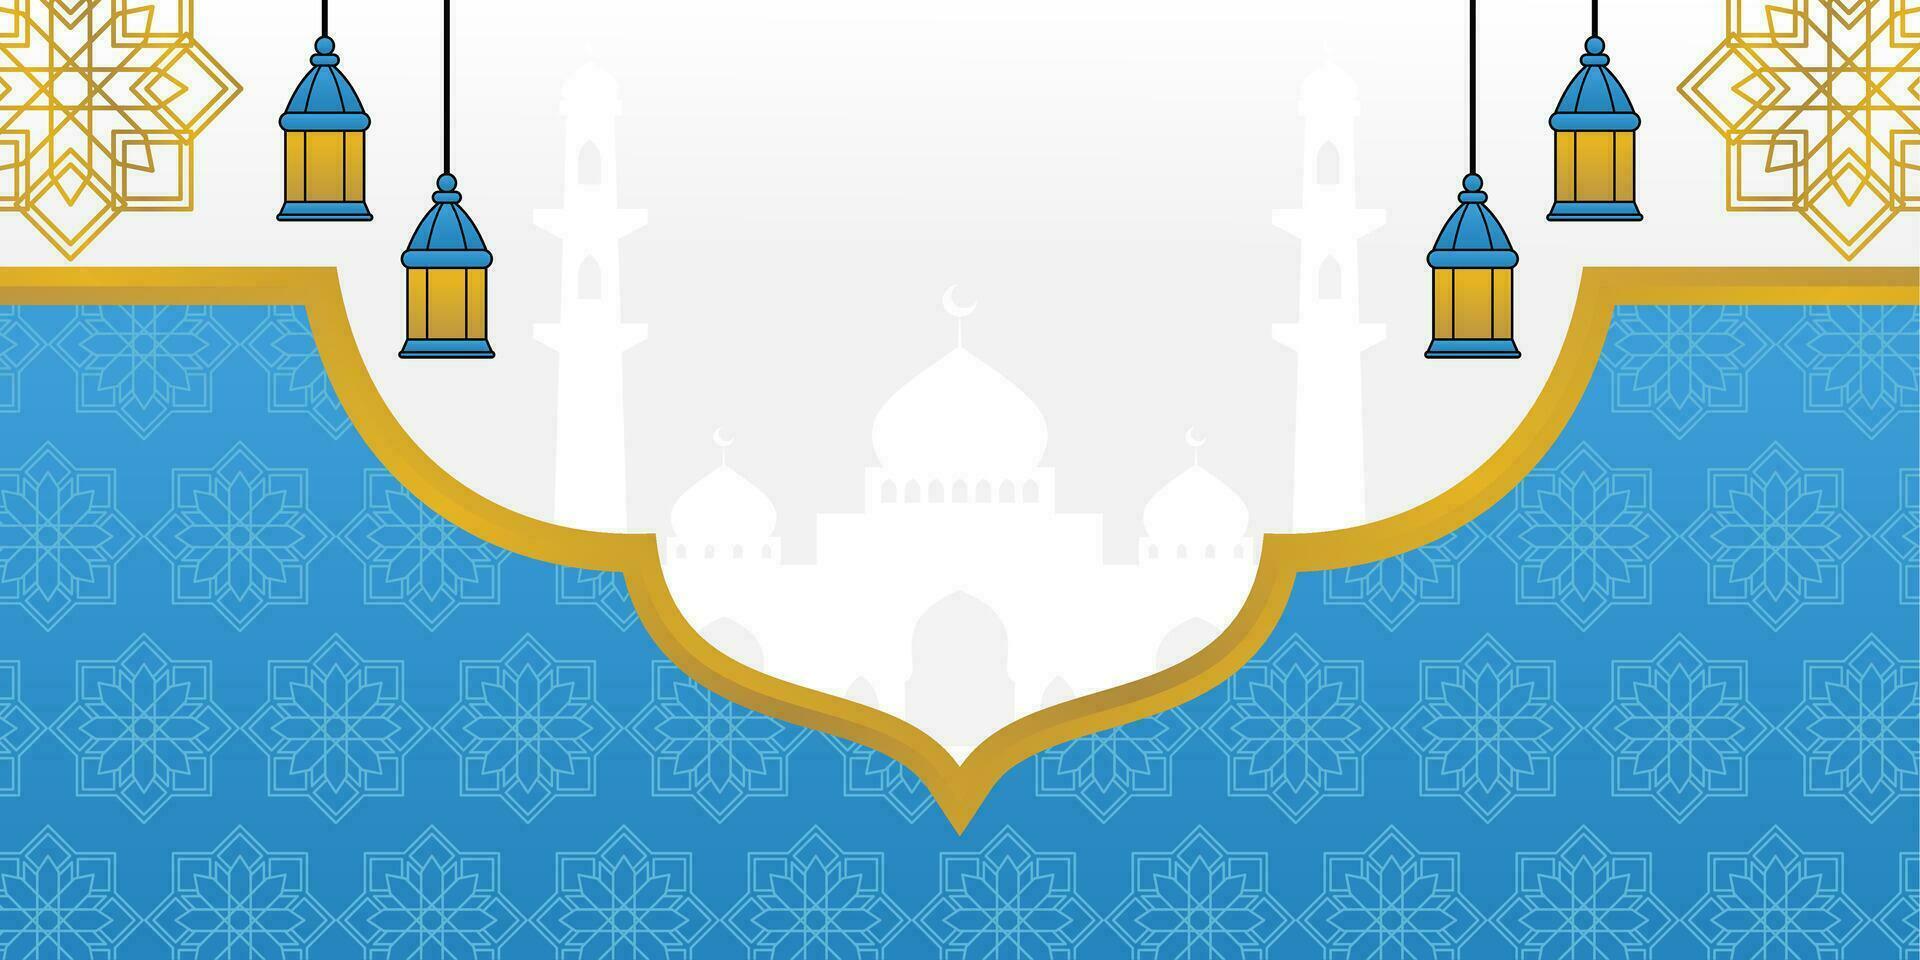 Blue Islamic background, with lantern ornament, mandala and mosque silhouette. vector template for banner, greeting card for Islamic holidays, eid al-fitr, ramadan, eid al-adha